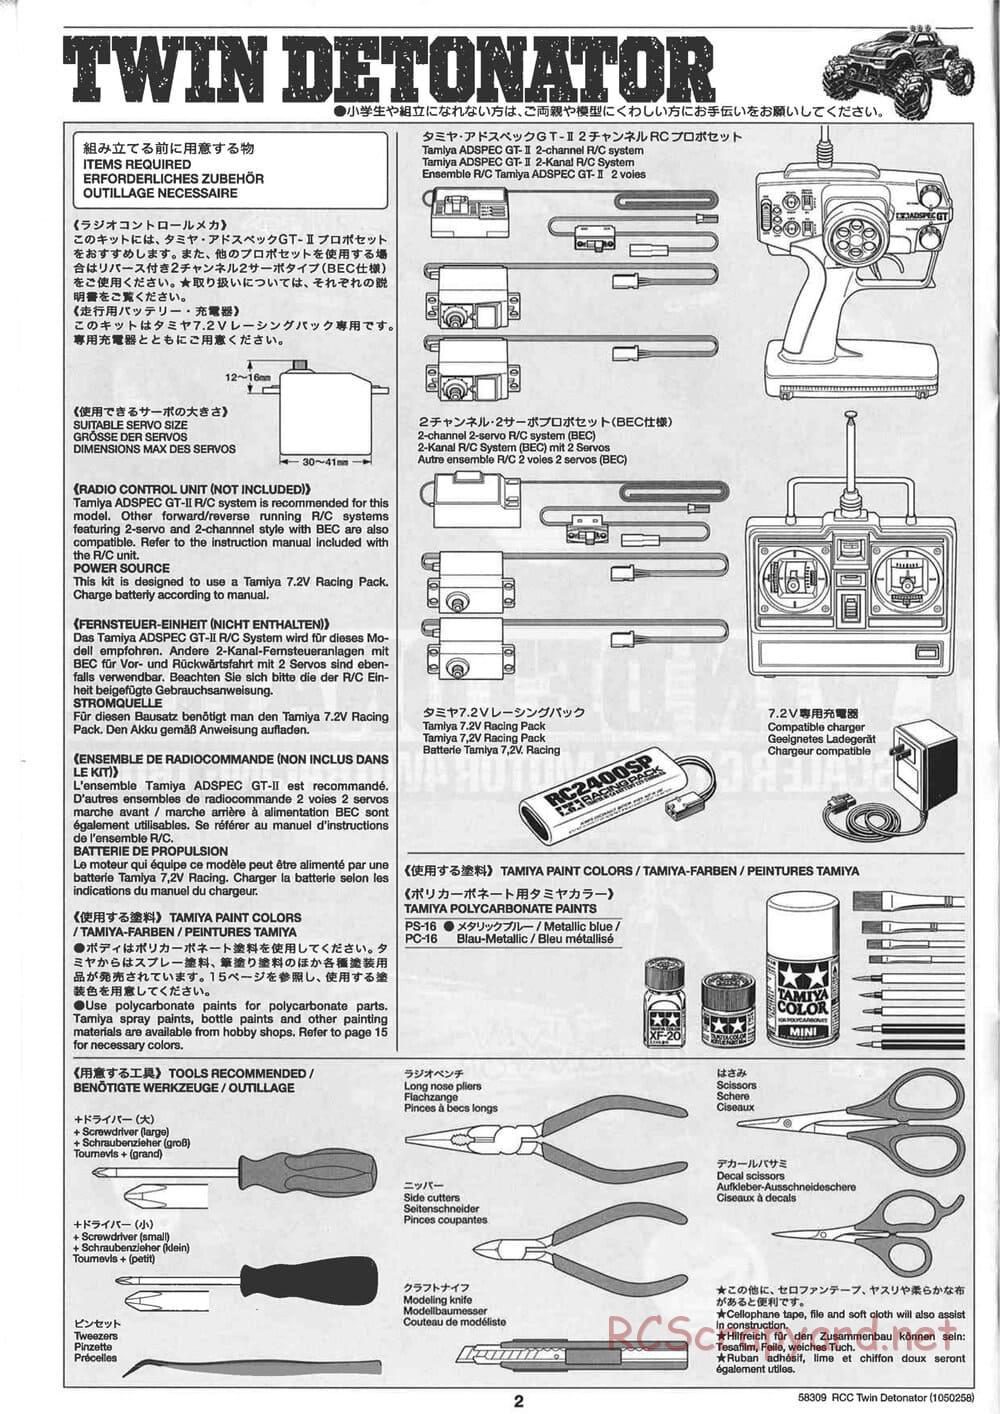 Tamiya - Twin Detonator - WR-01 Chassis - Manual - Page 2